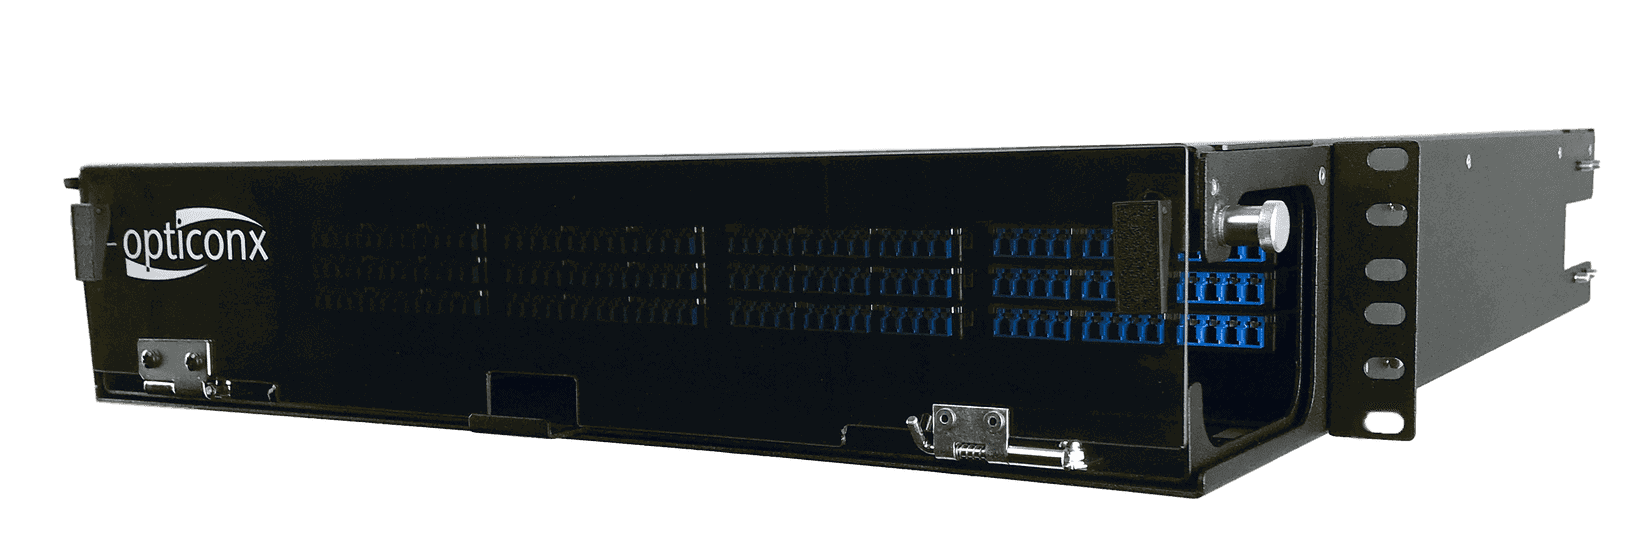 Opticonx XD 2U 288 Fiber Patch Panel - Ready to Install